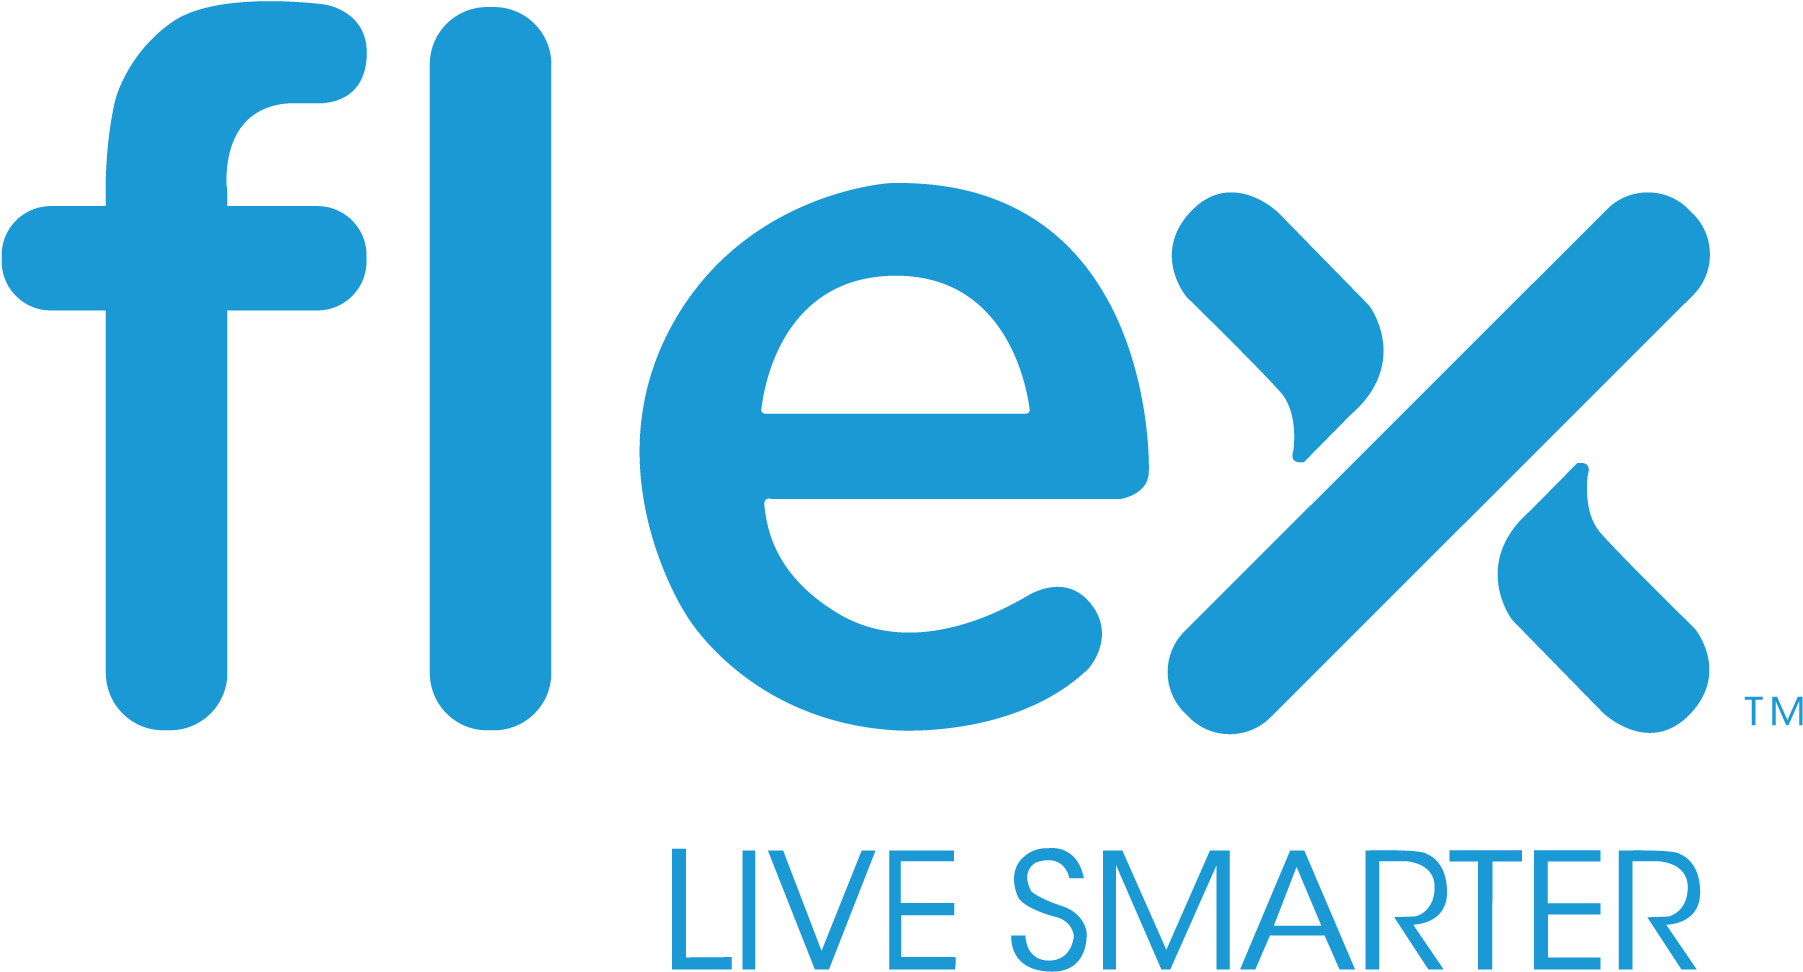 Flex Png - Flextronics - Flex Live Smarter Logo Clipart (1803x972), Png Download